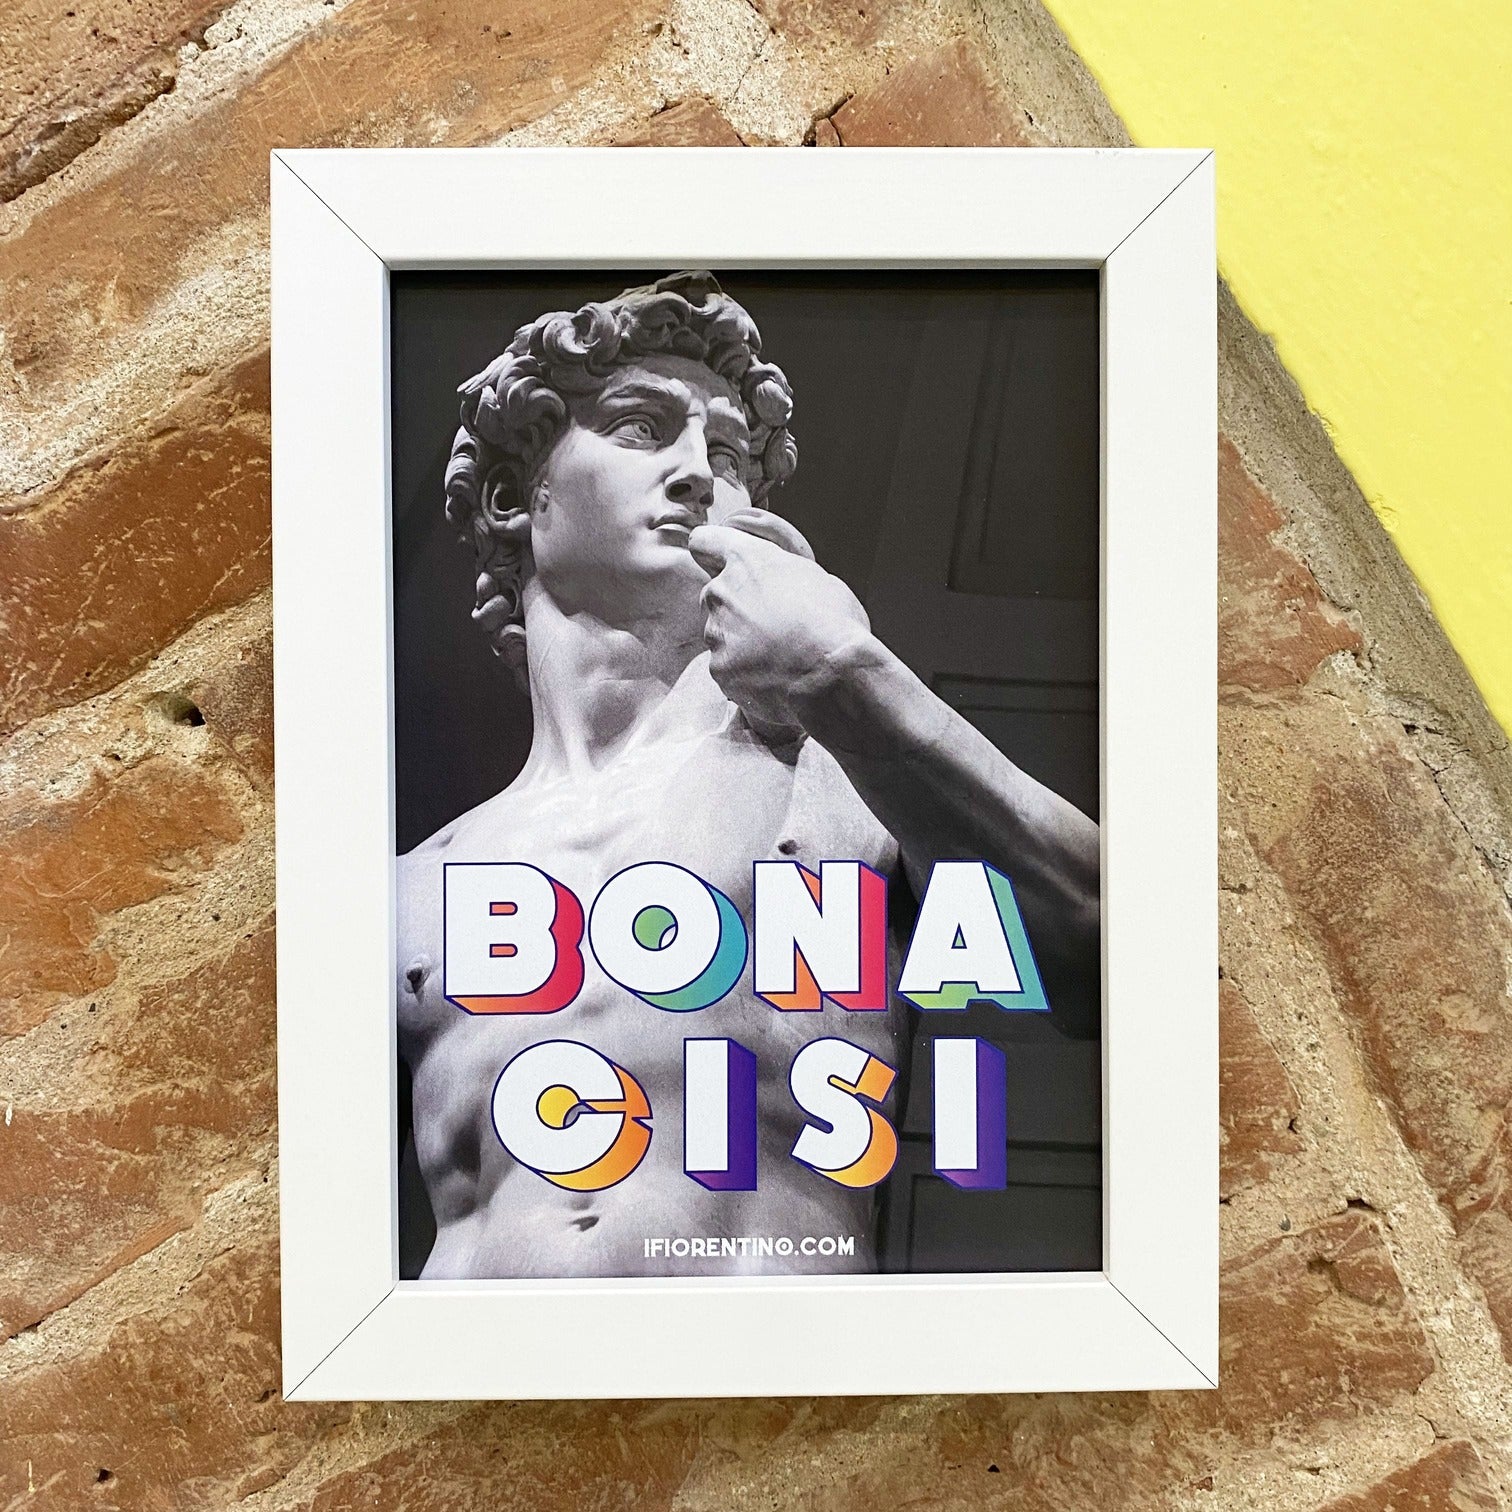 DAVID BONA CISI STAMPA + CORNICE - poster fiorentini - poster firenze - regalo fiorentino - fiorentino  - foppeddittelo